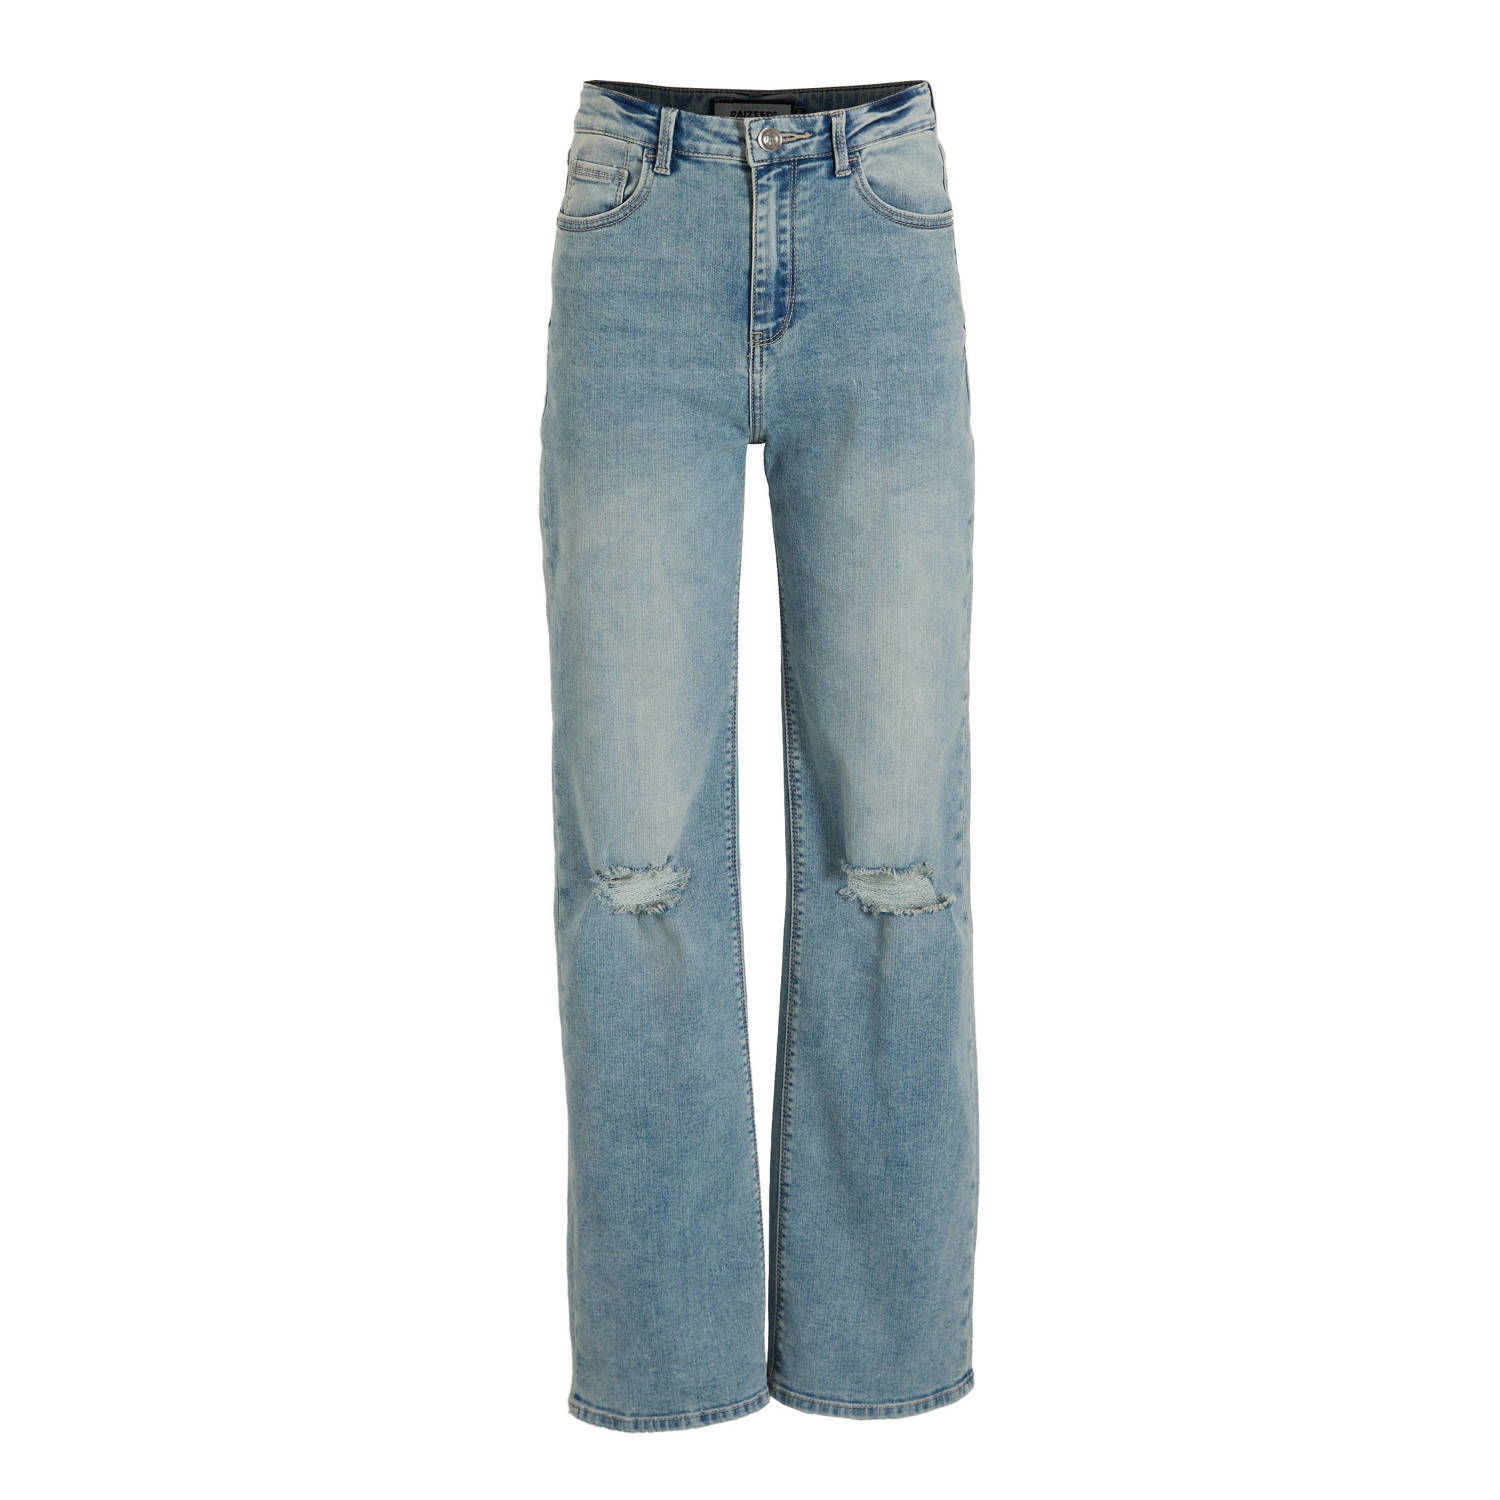 Raizzed wide leg jeans vintage blue denim Blauw Stretchdenim 104